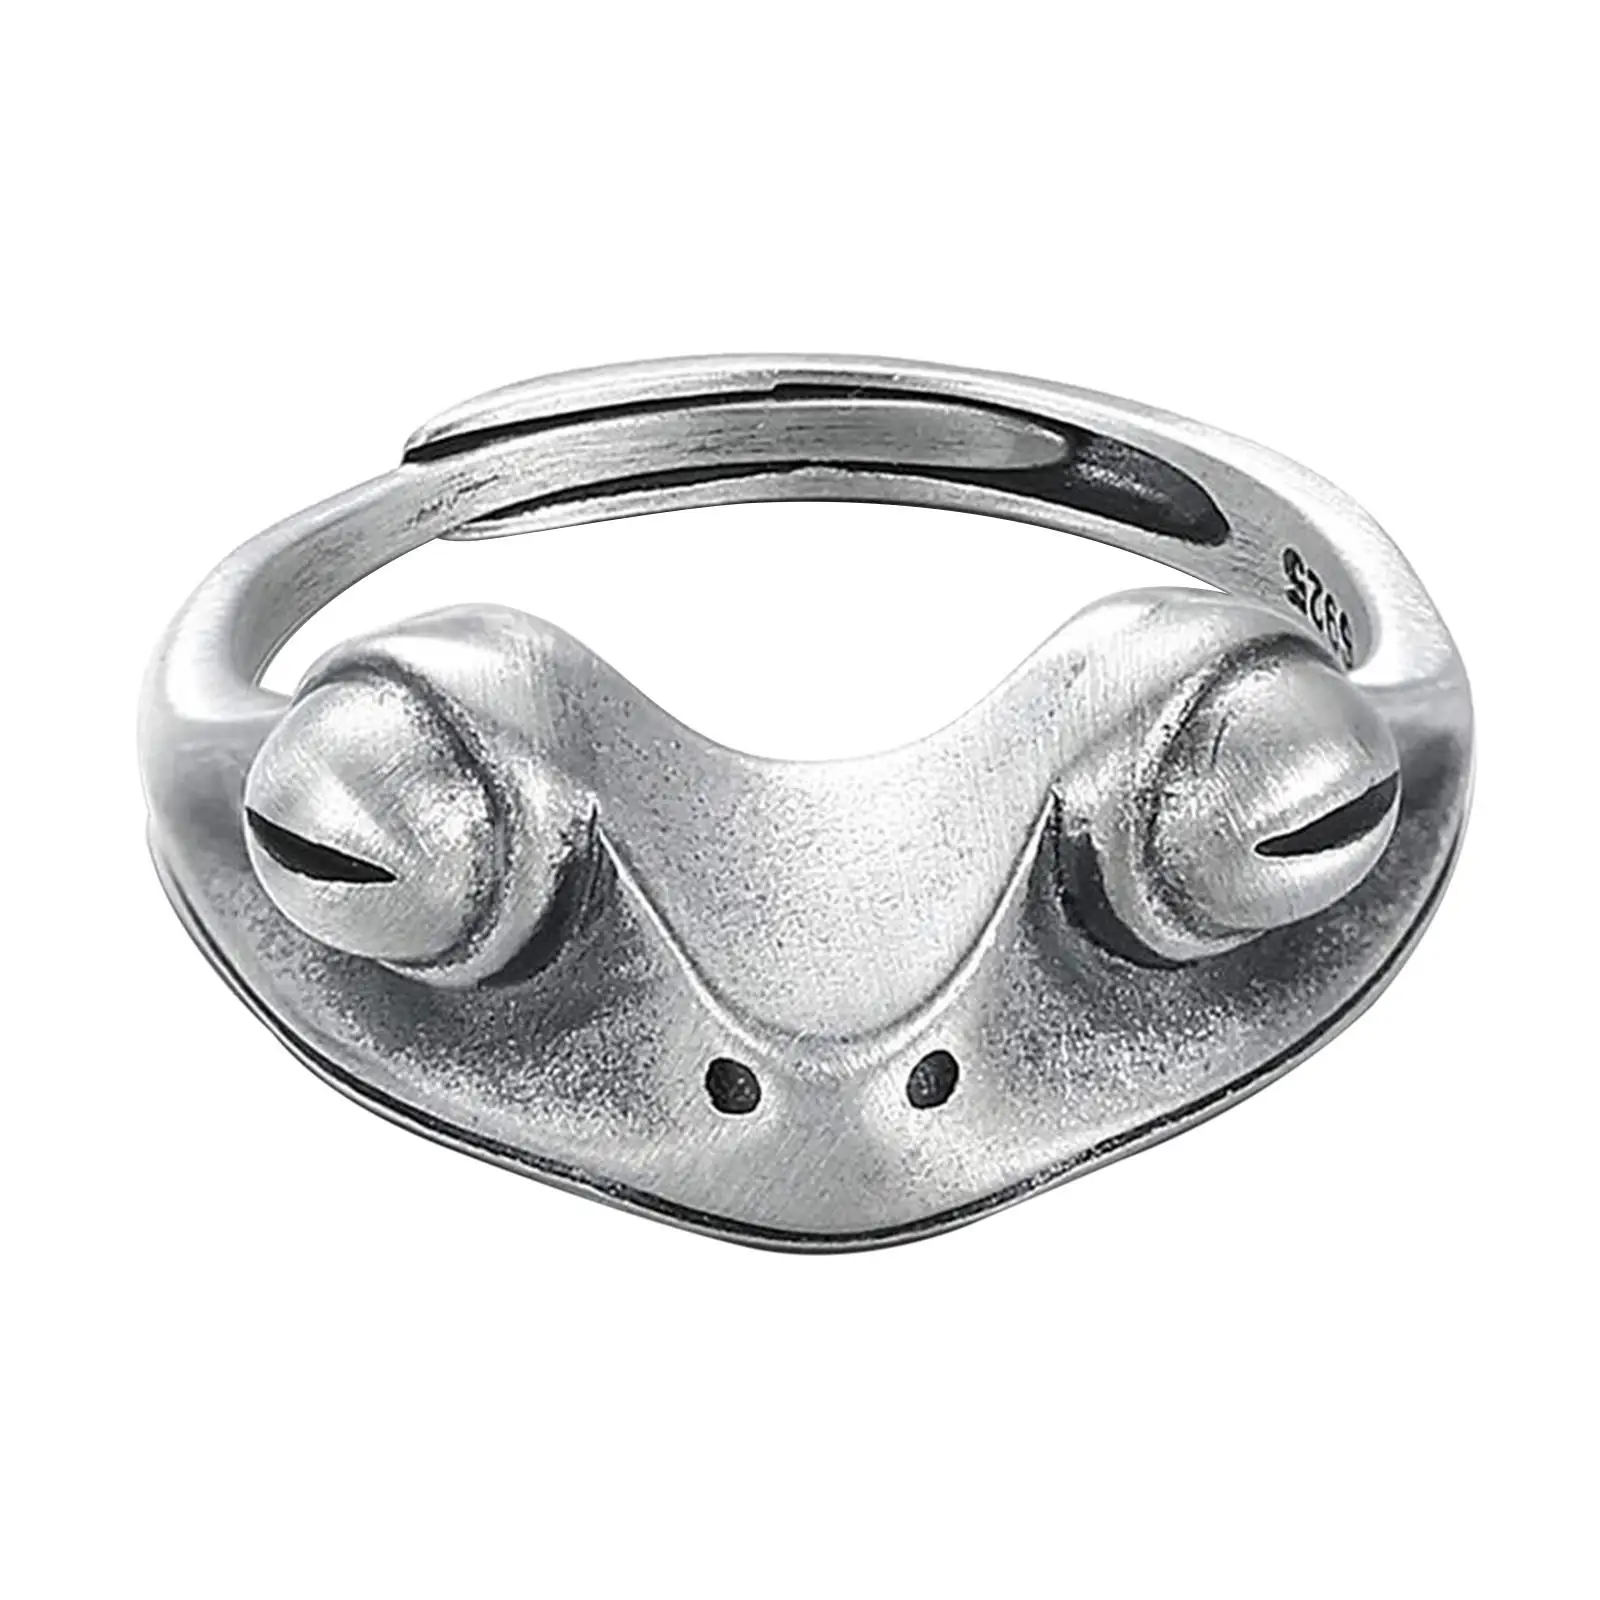 Adjustable Adjustable Rings Vintage Cute Hollowed Vintage Ring for Best Friend Mother